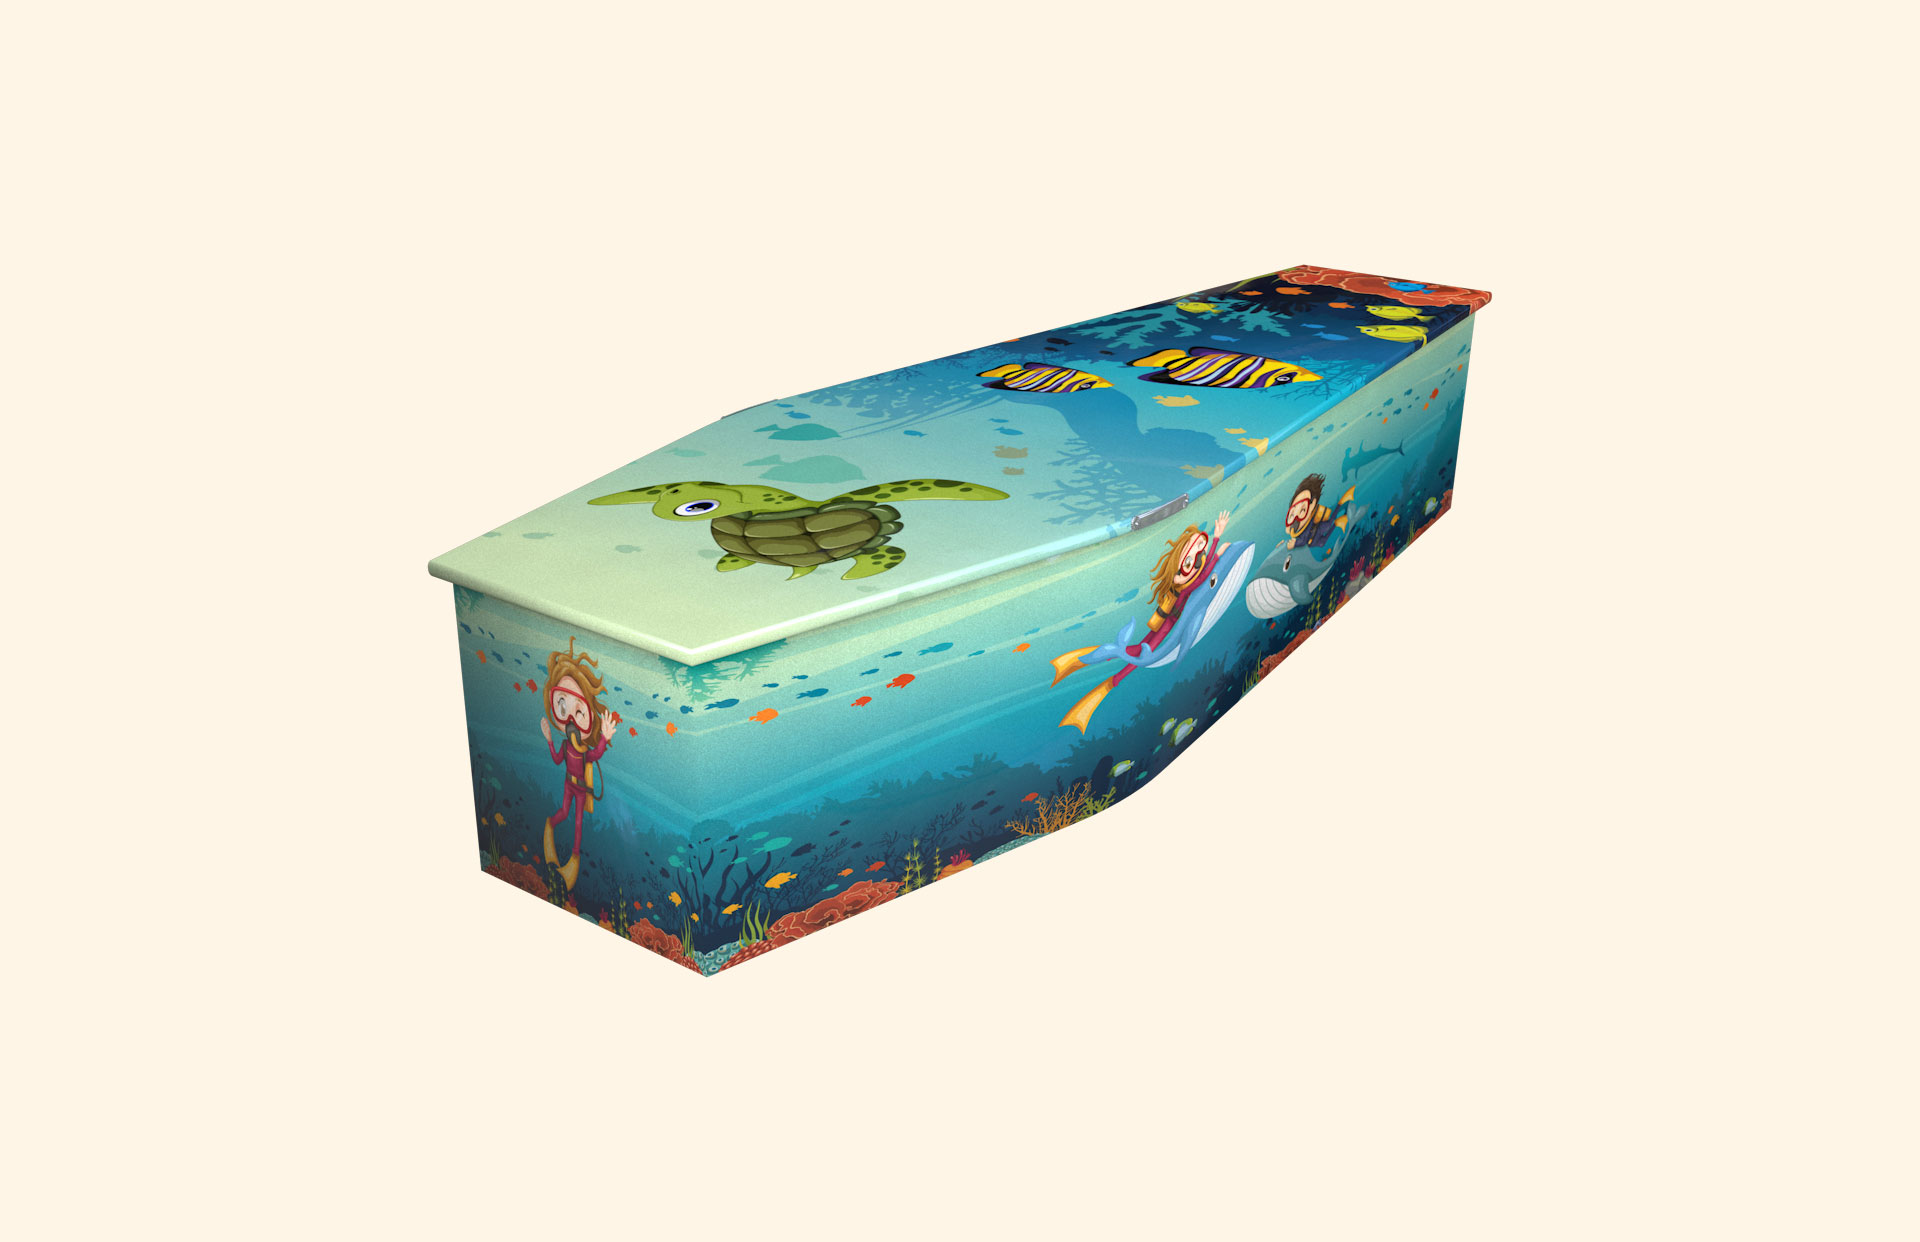 Scuba Diving design on a child coffin